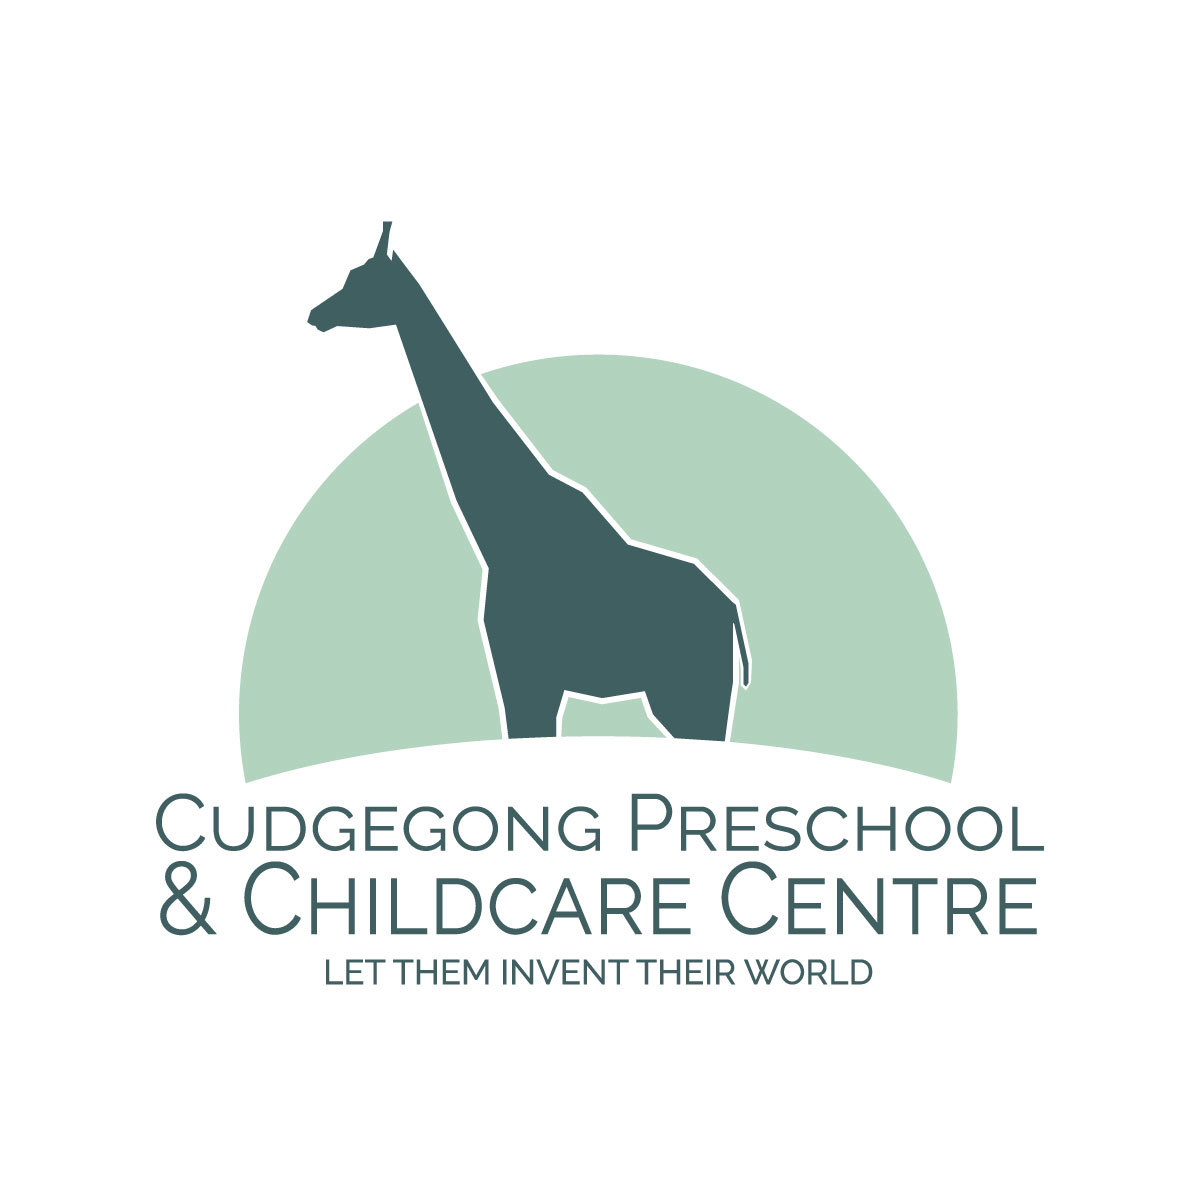 Cudgegong Preschool & Childcare Centre - Ruse